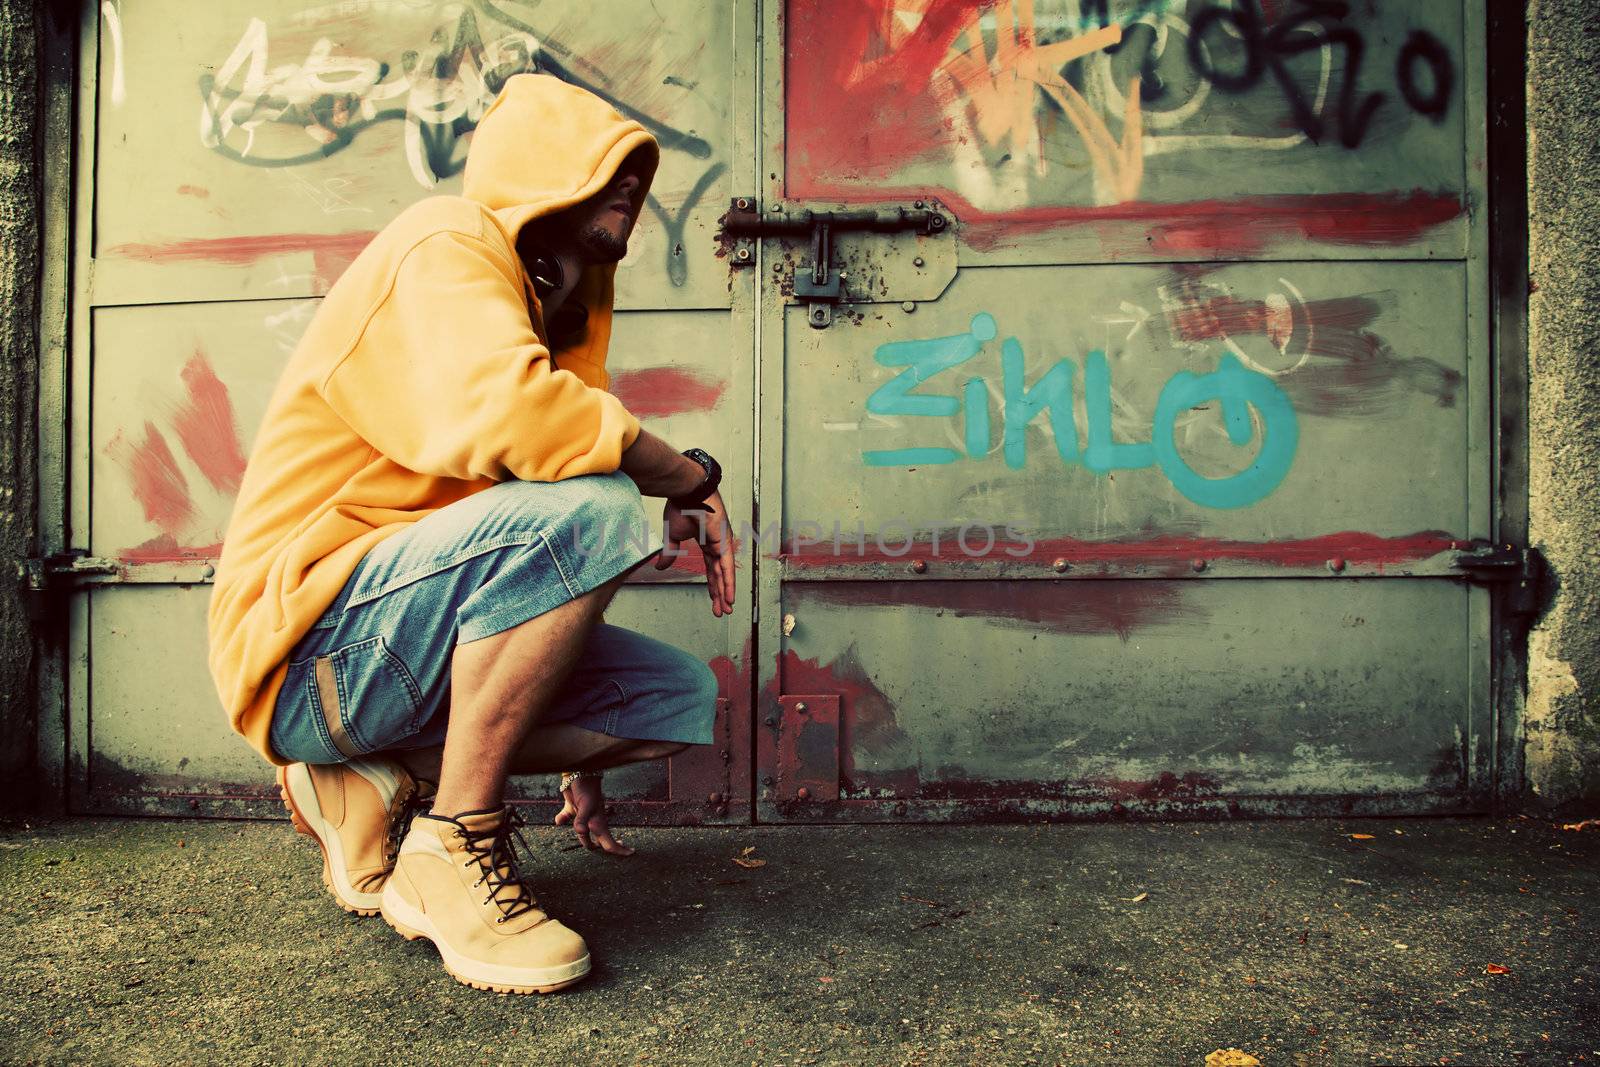 Young man portrait in hooded sweatshirt / jumper on grunge graffiti wall